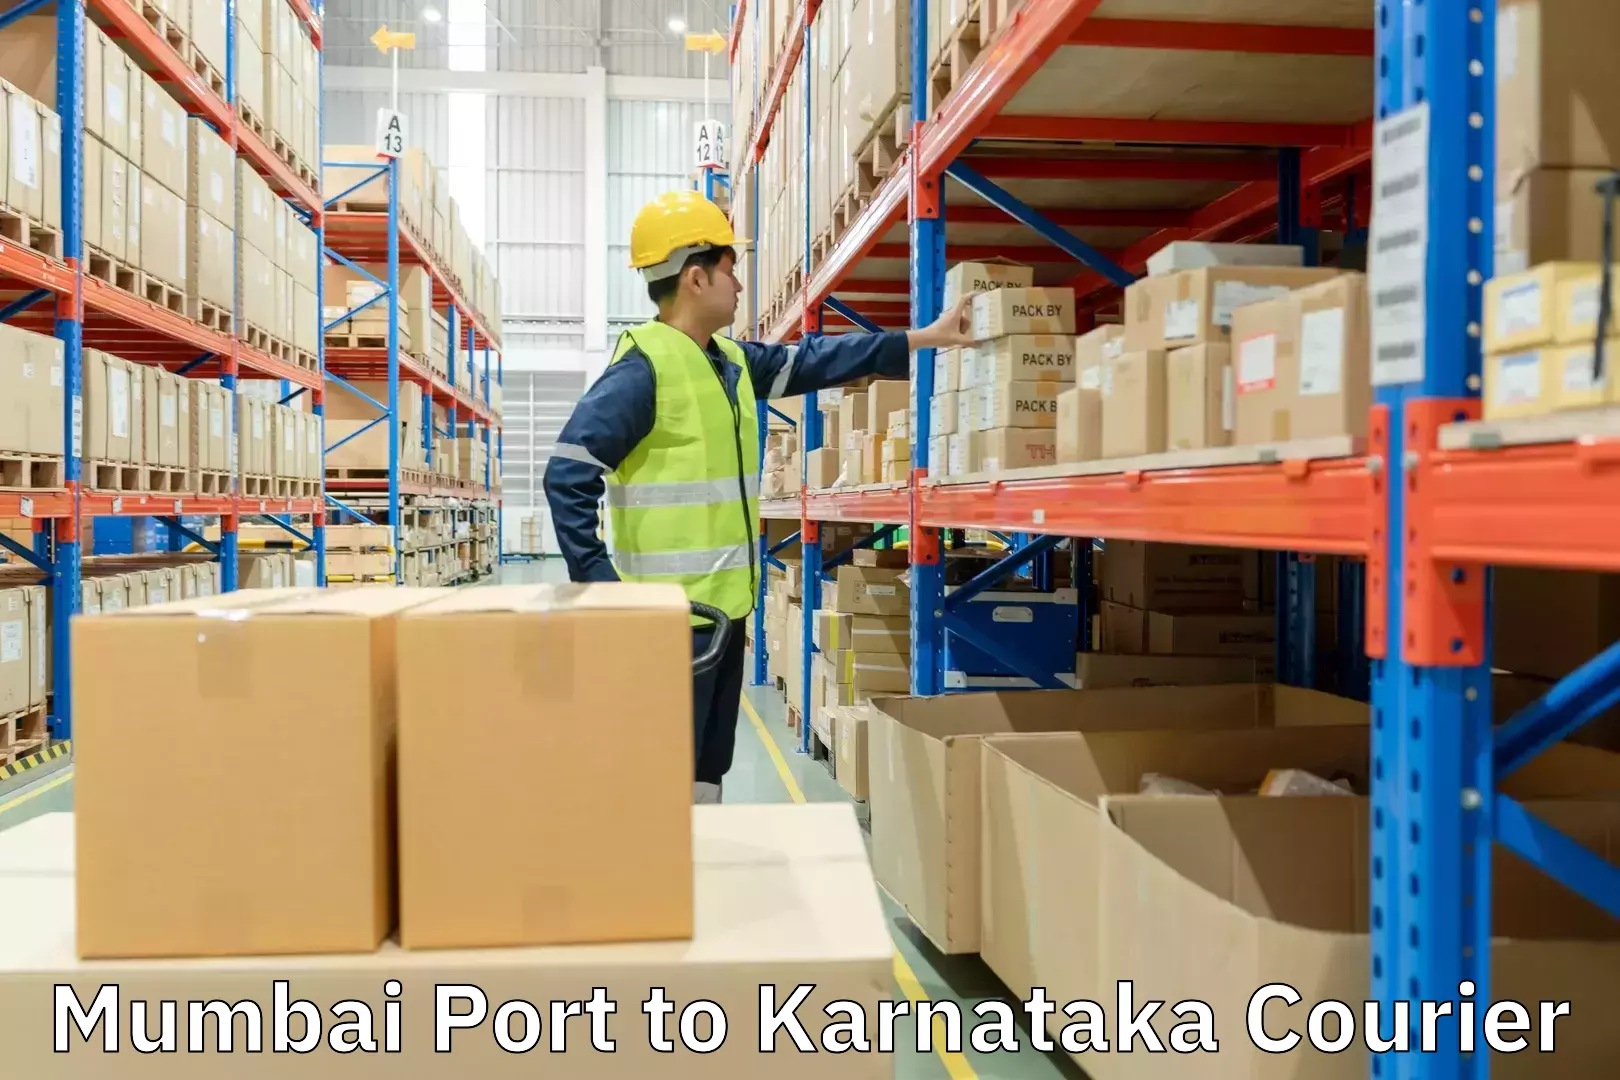 Customer-centric shipping in Mumbai Port to Karnataka